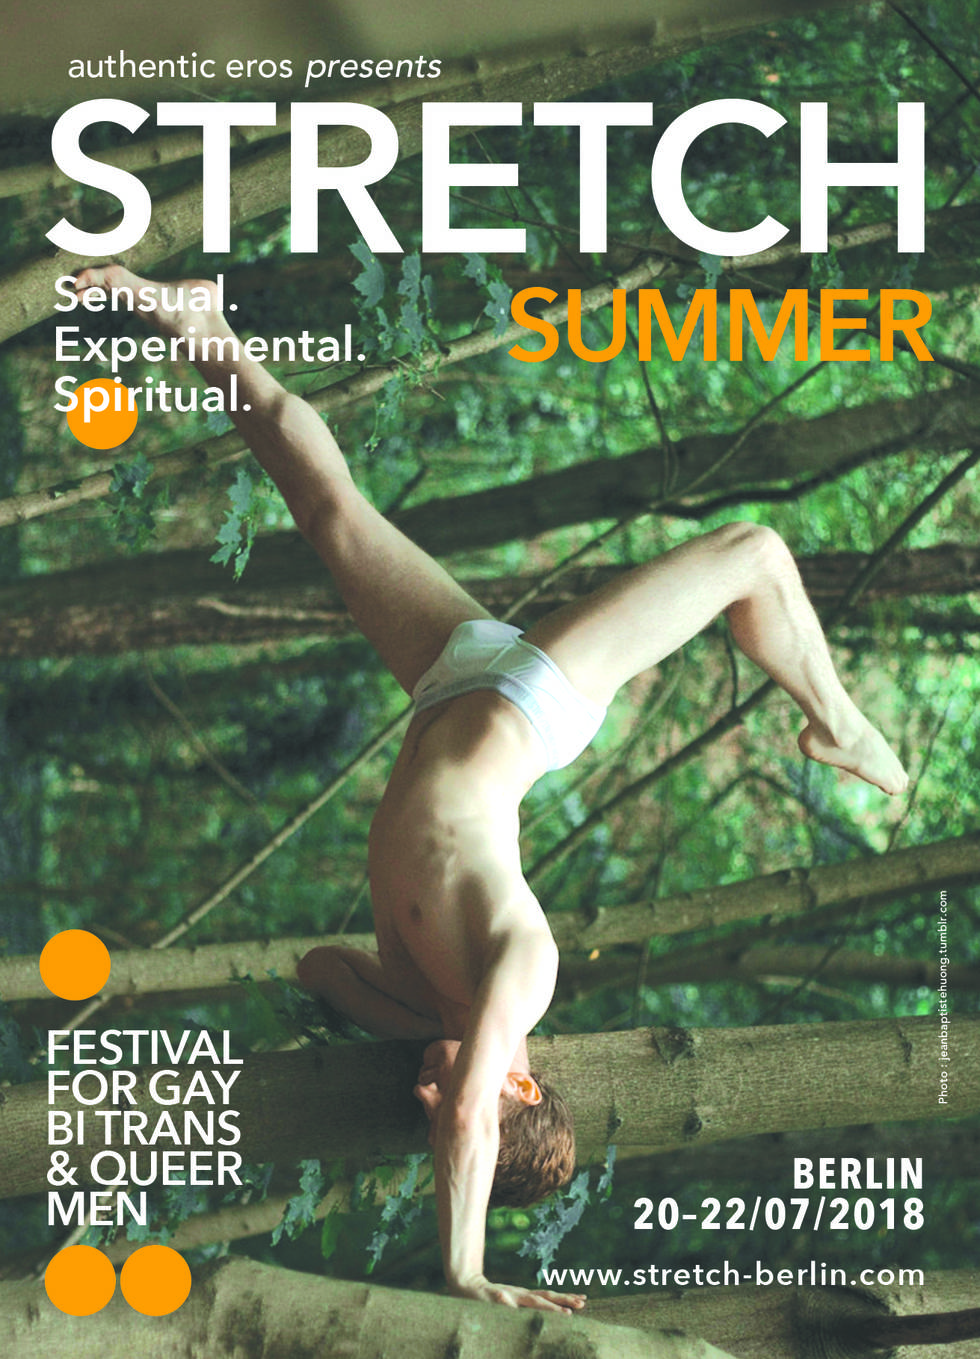 Stretch Summer